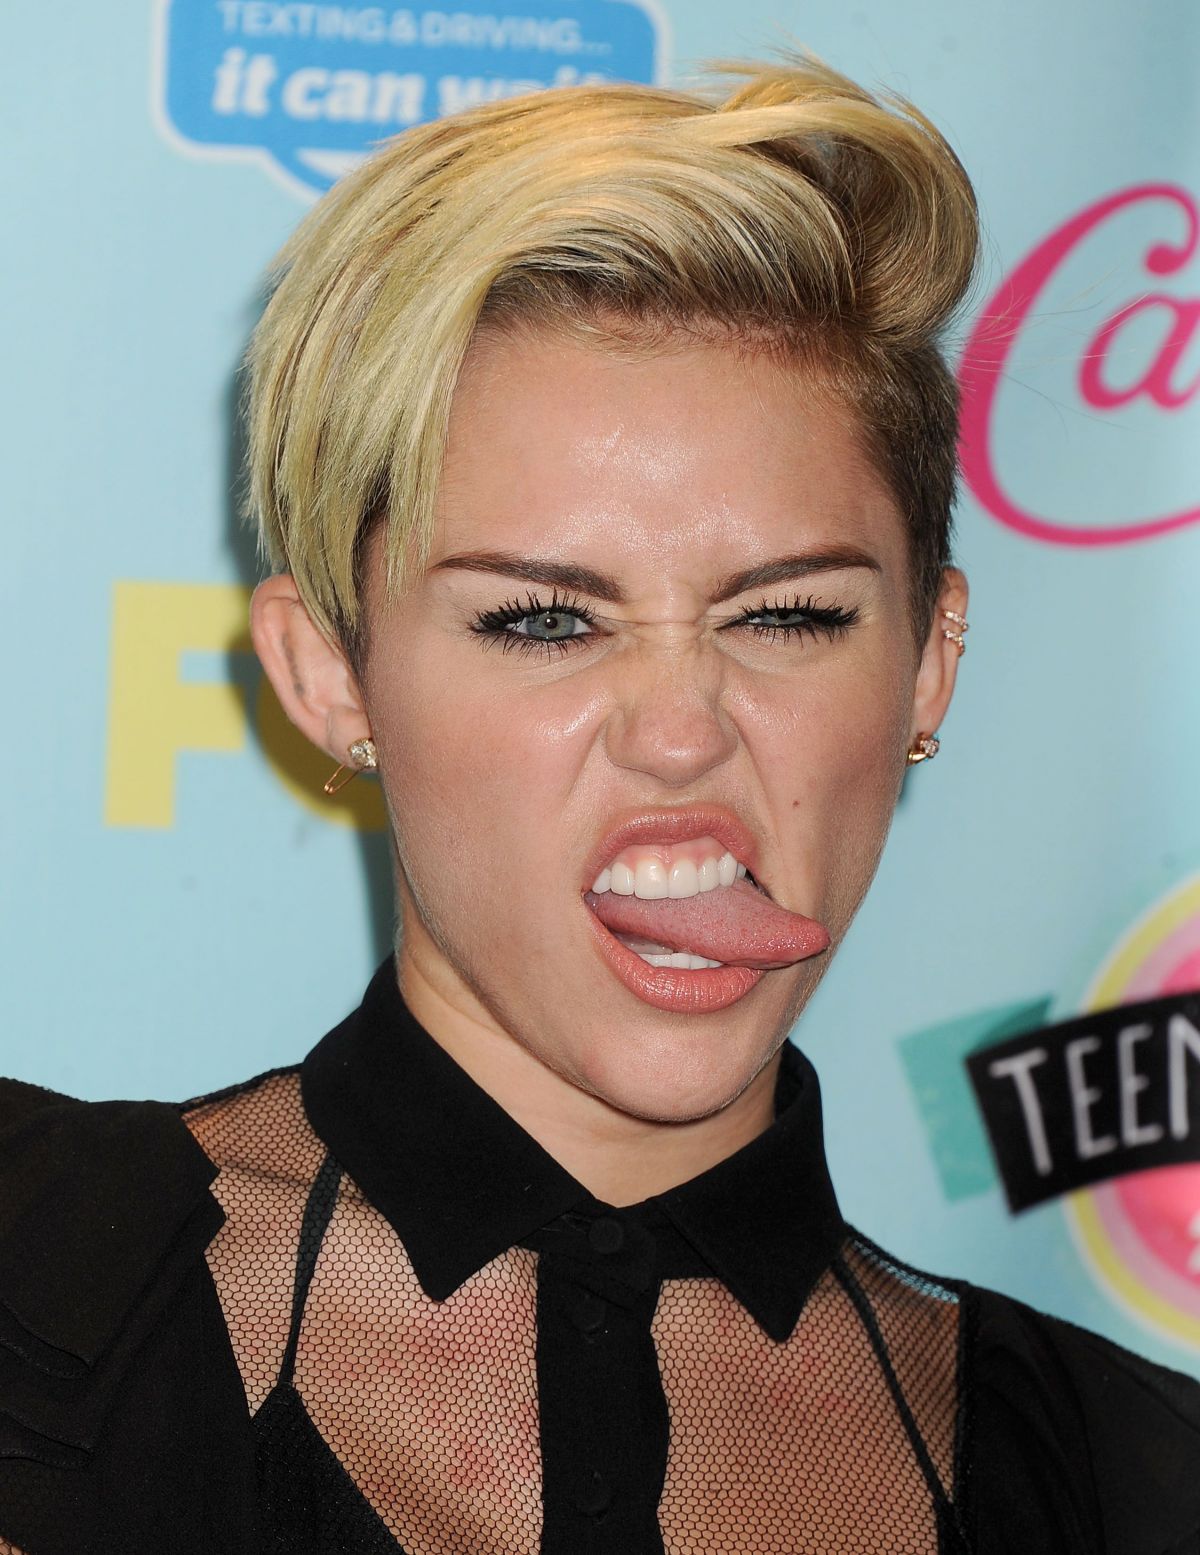 Miley Cyrus in Teen Choice Awards 2013